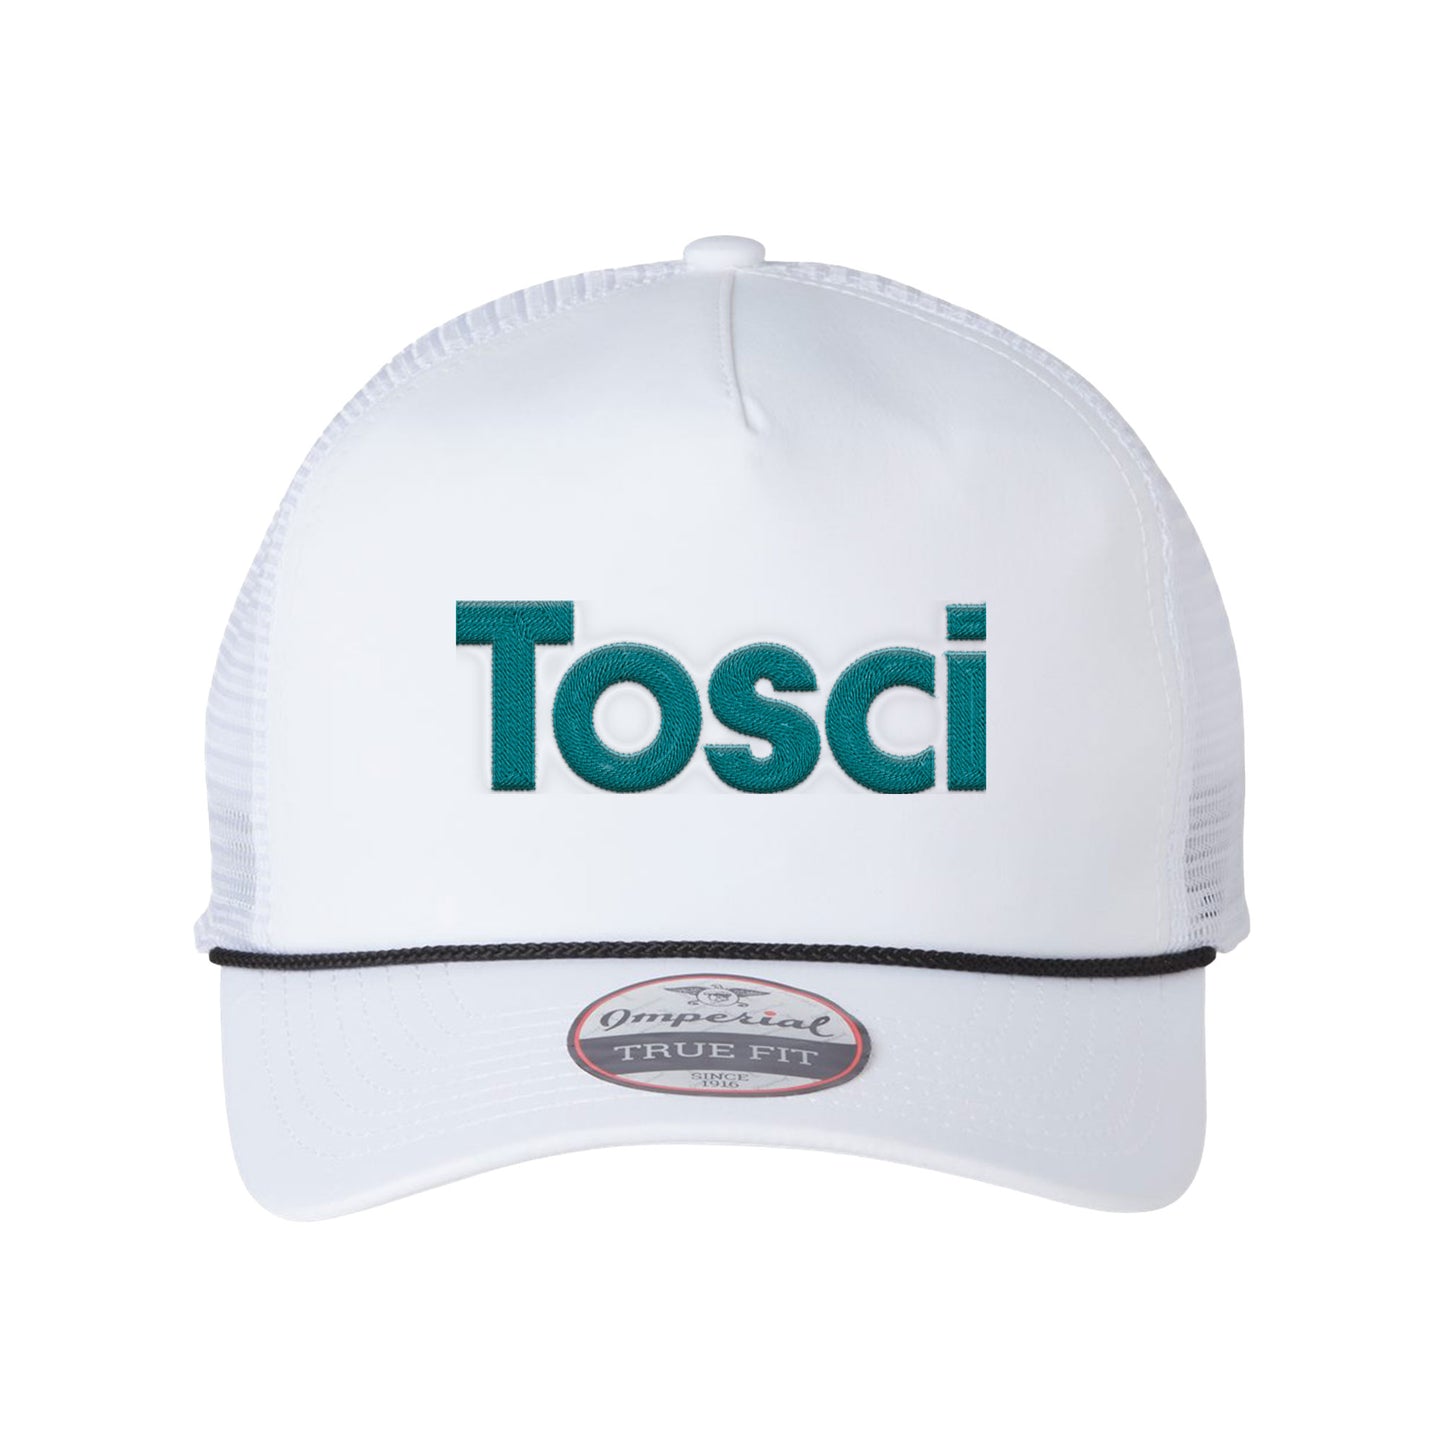 Toscanini's White Trucker Hat